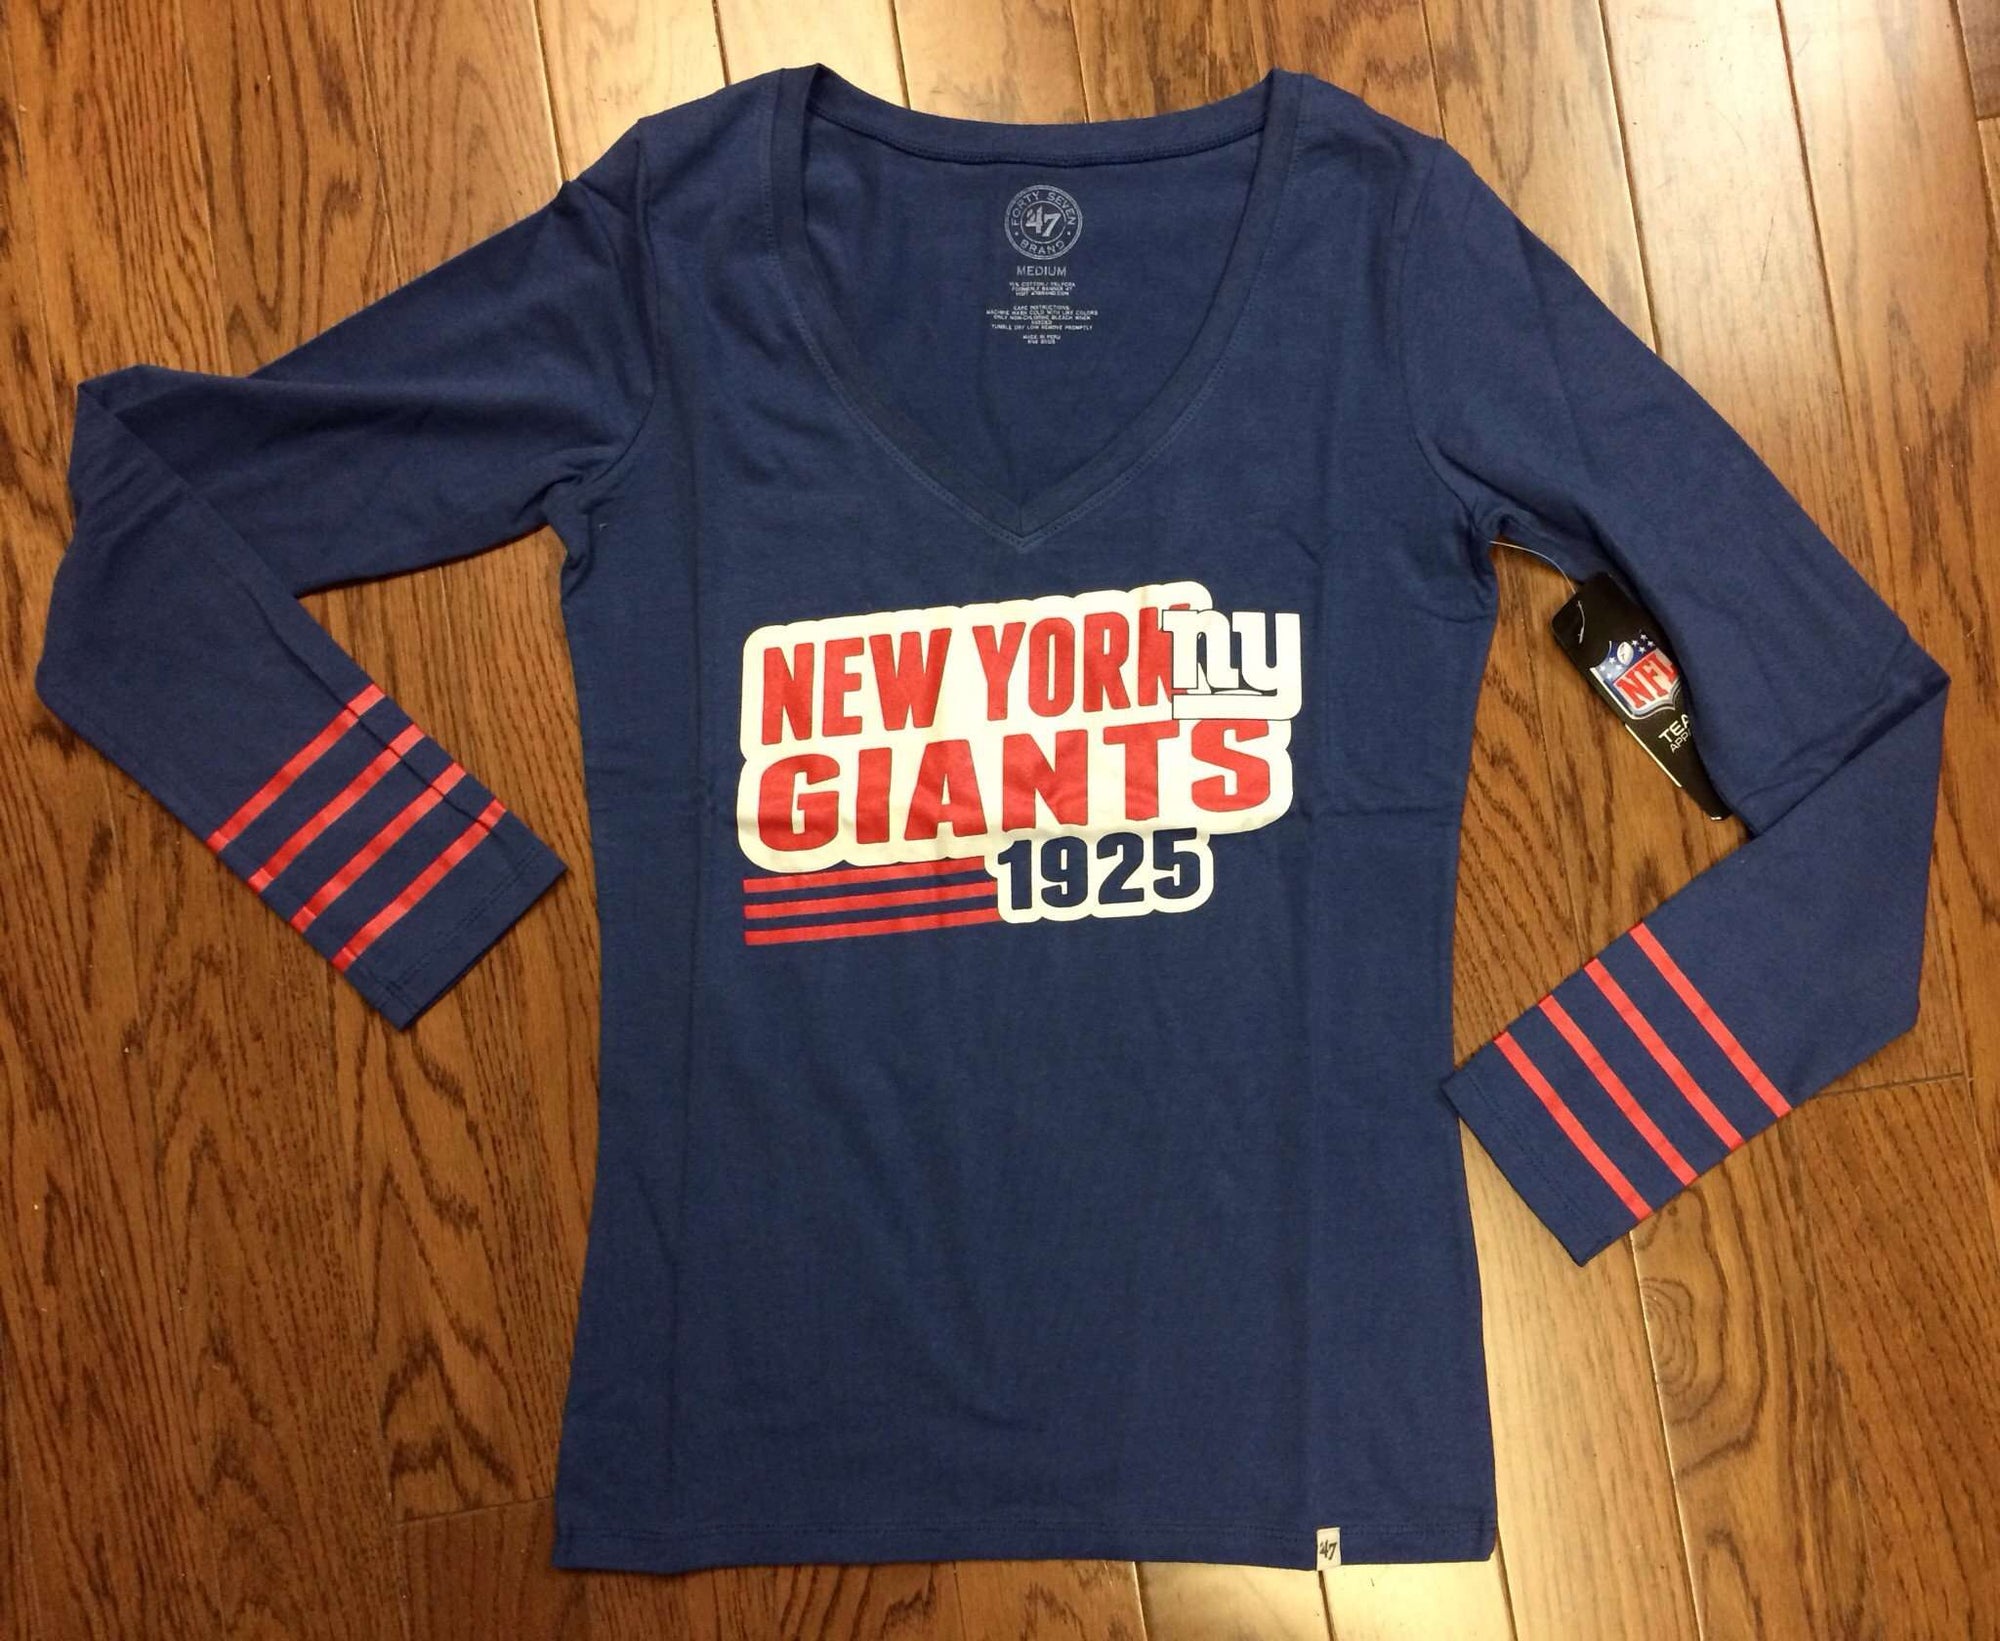 new york giants womens shirts